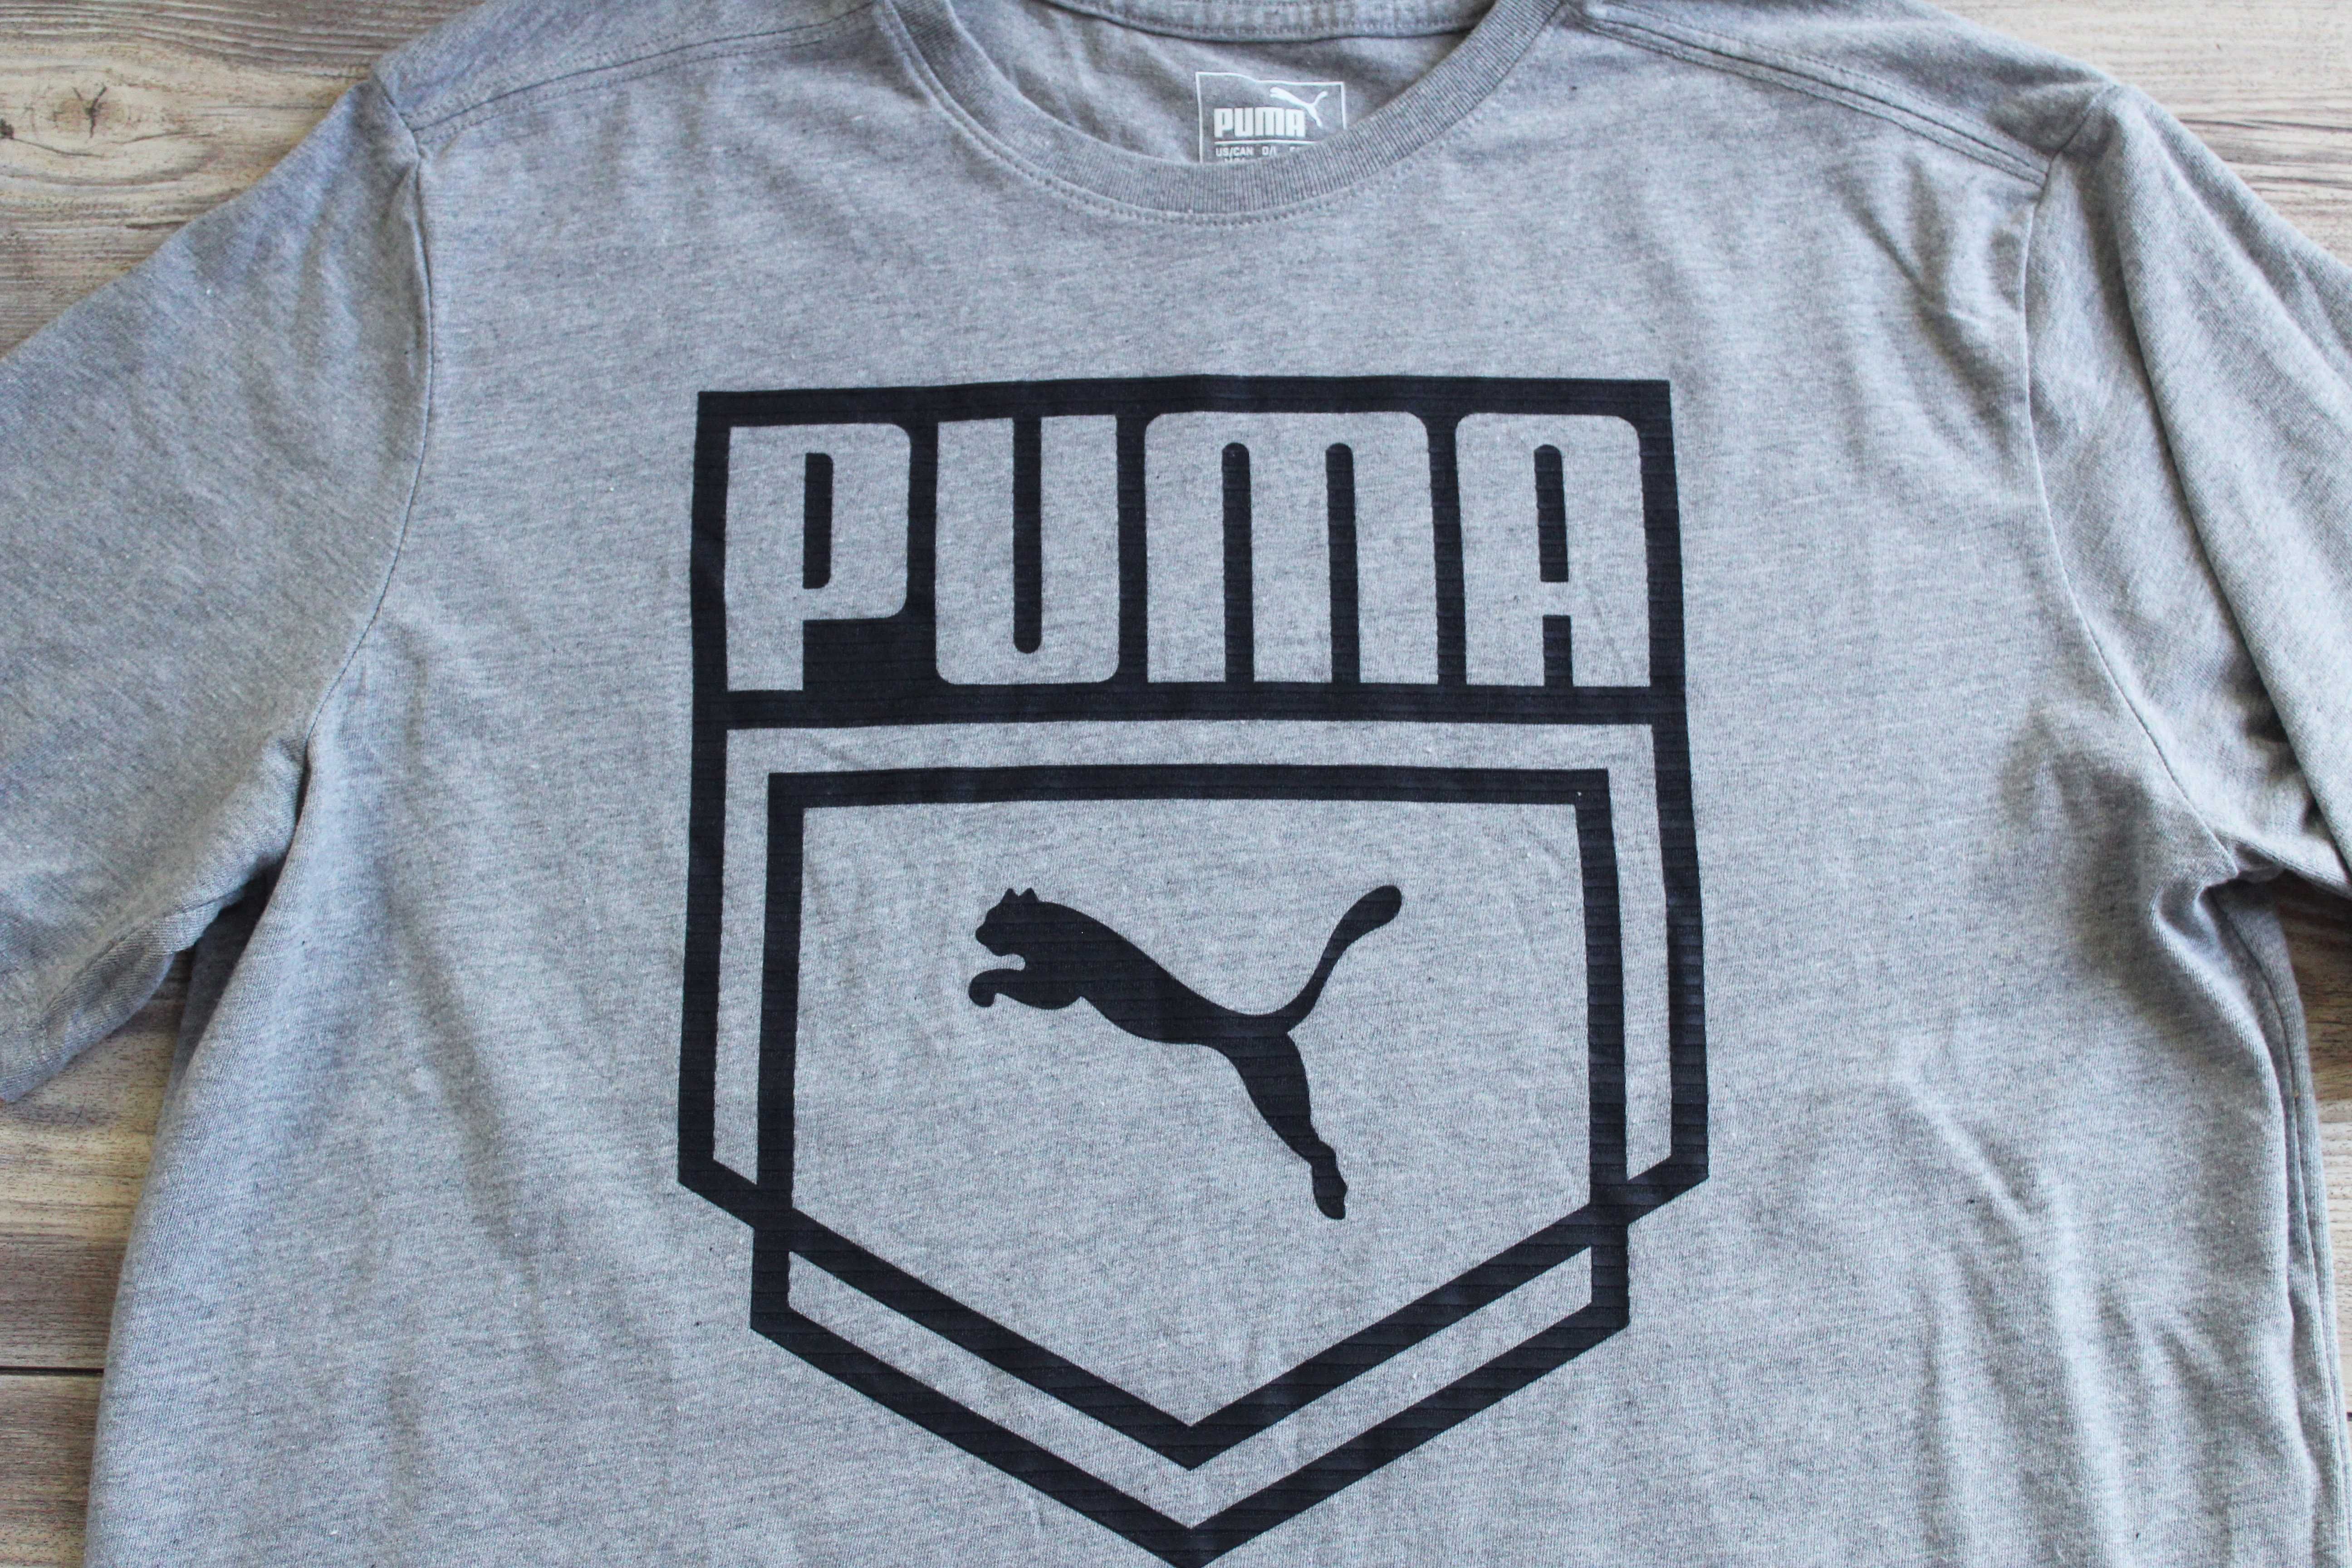 Oryginalna Koszulka Puma męska M jak NOWA